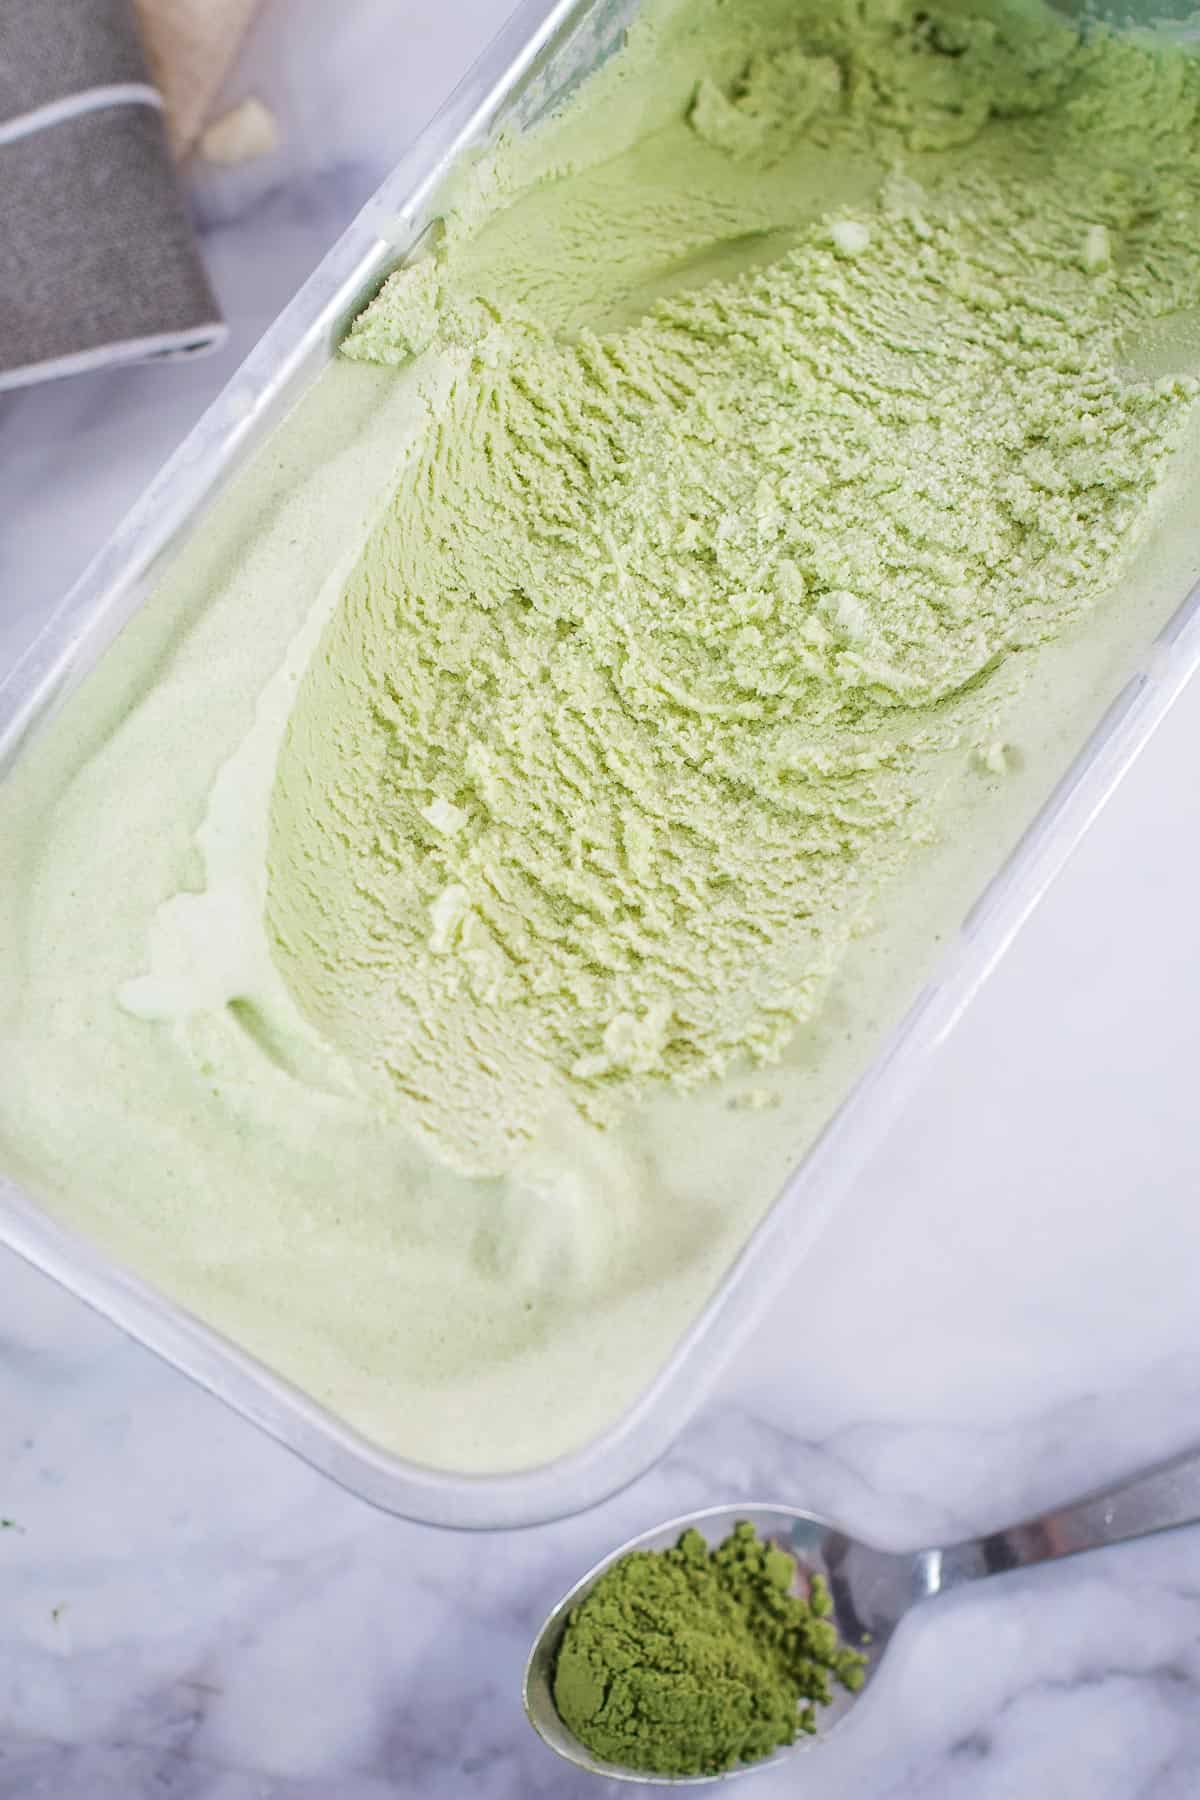 An ice cream tub with matcha ice cream